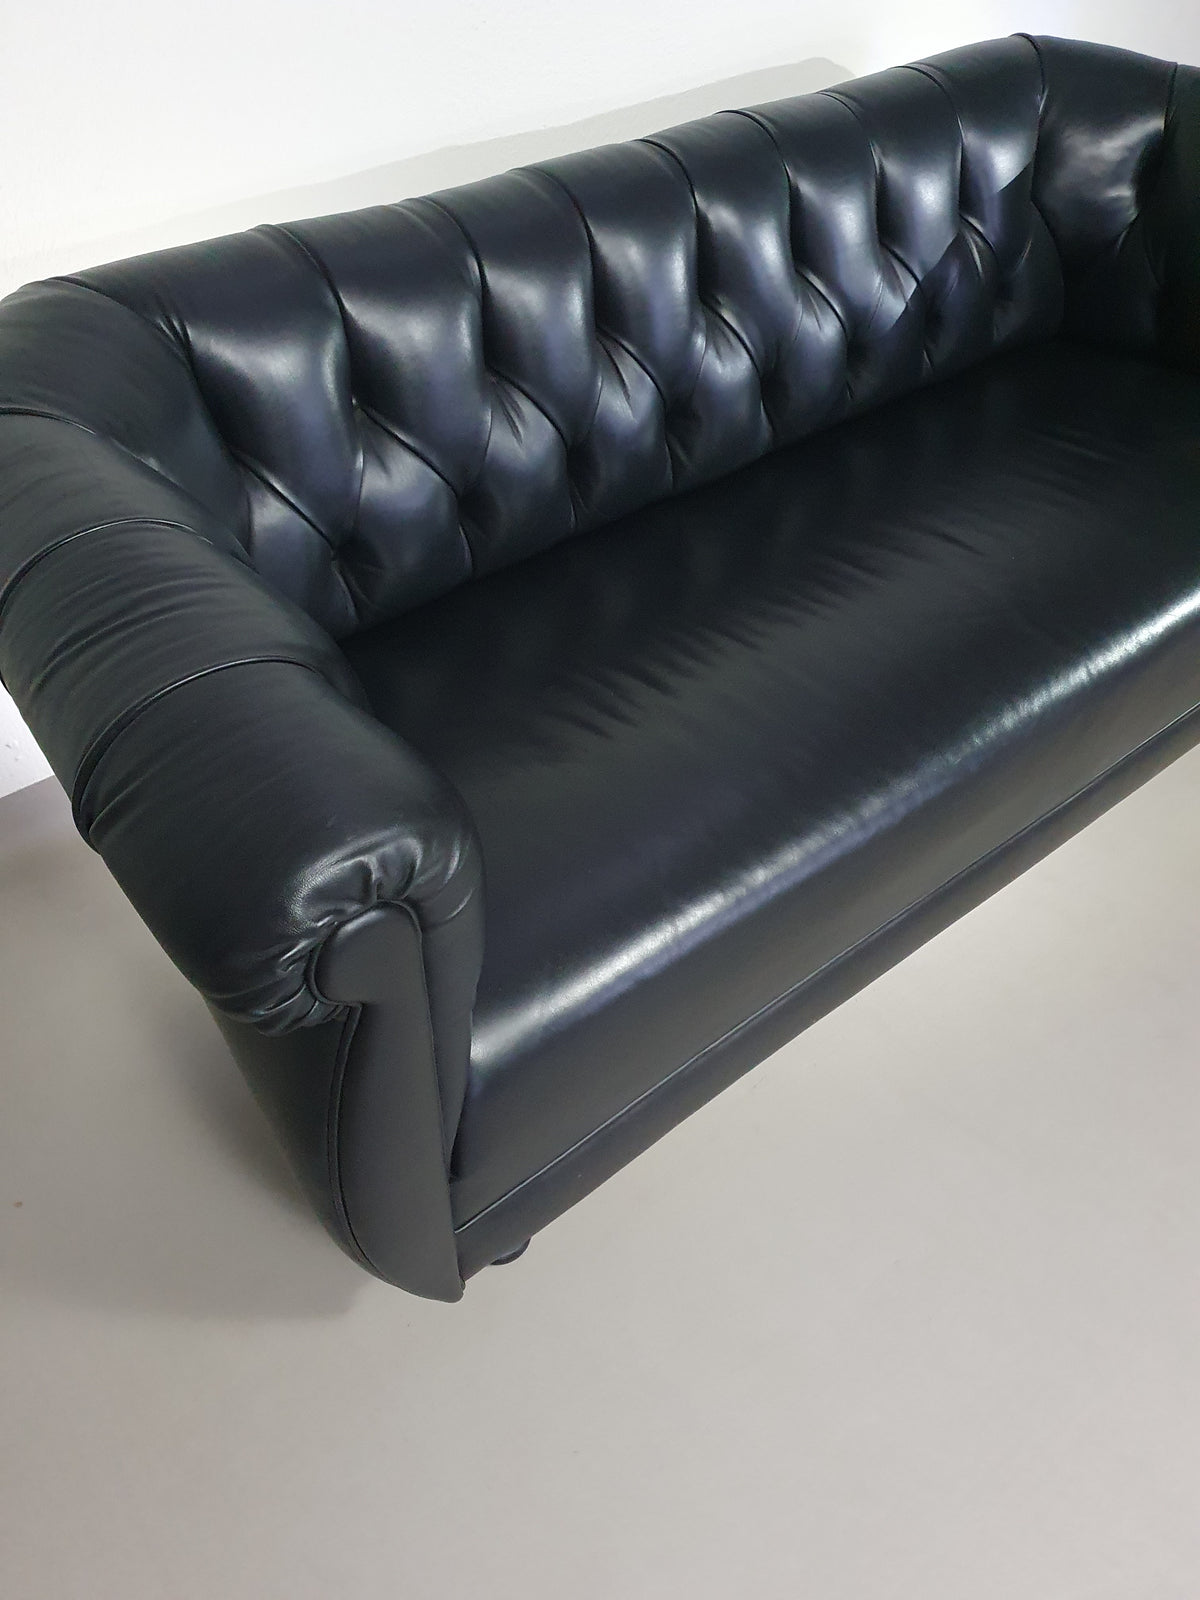 Rotonda sofa designed by Anna Gili originates from the Mastrangelo exposition in 1997 at The Frozen Fountain in Amsterdam